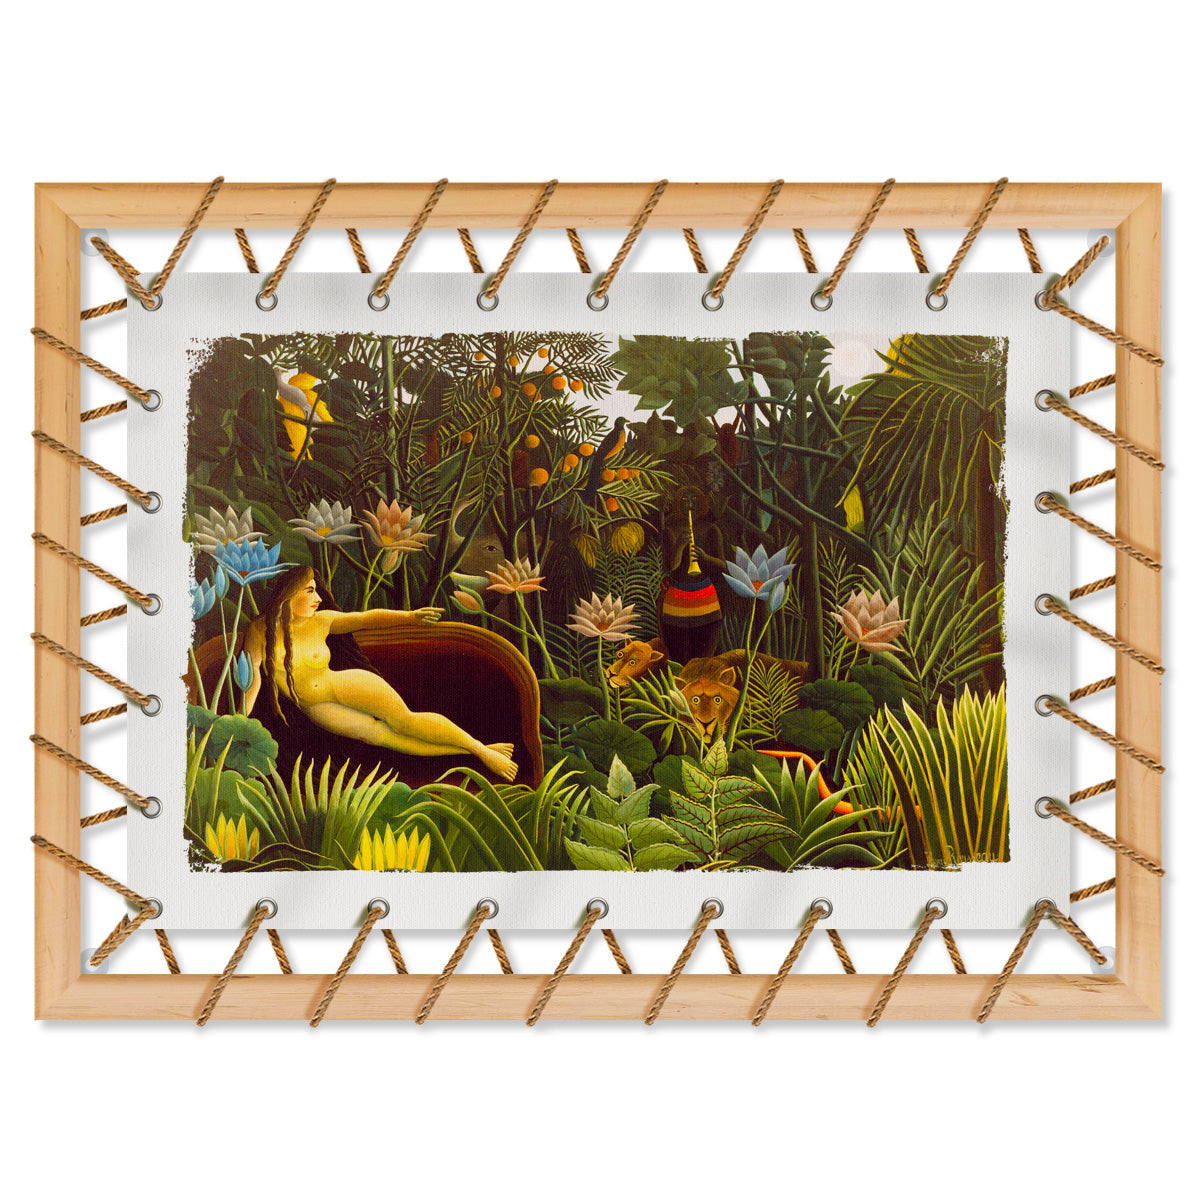 Tensotela 70x95 cm - Henri Rousseau il Sogno - PlastiWood(14558242)